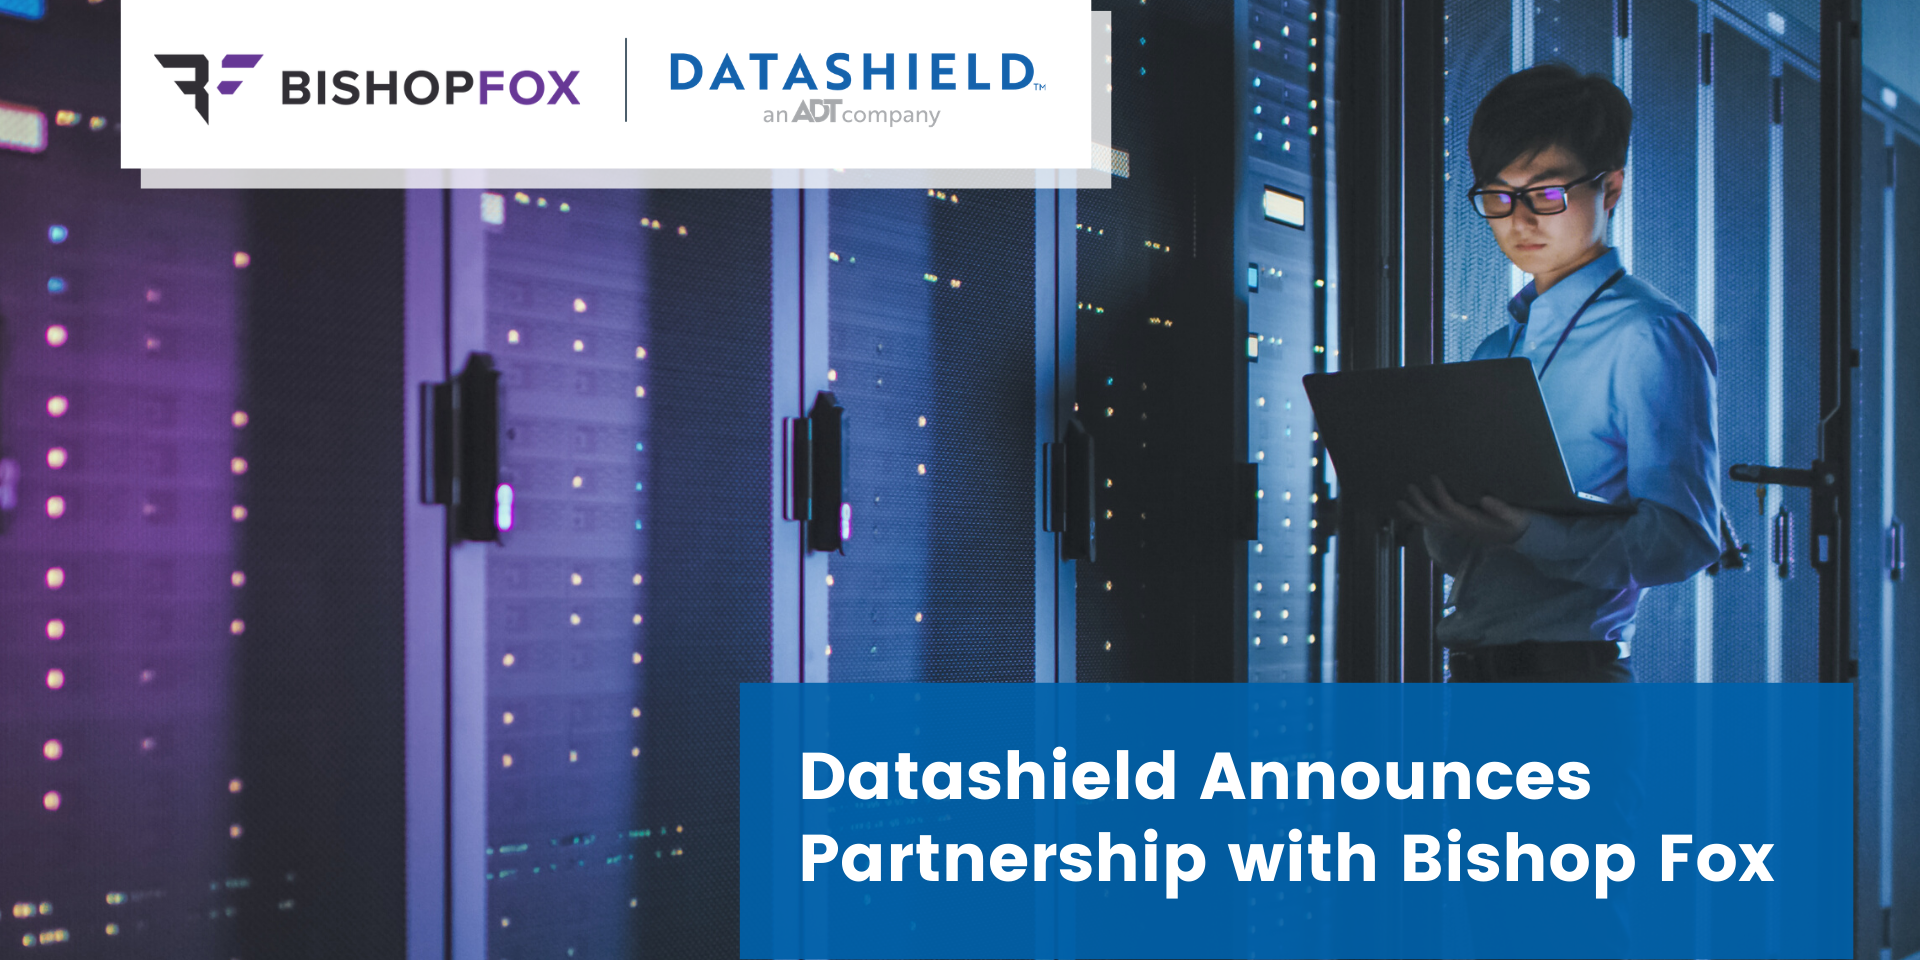 Datashield Announces Partnership with Bishop Fox